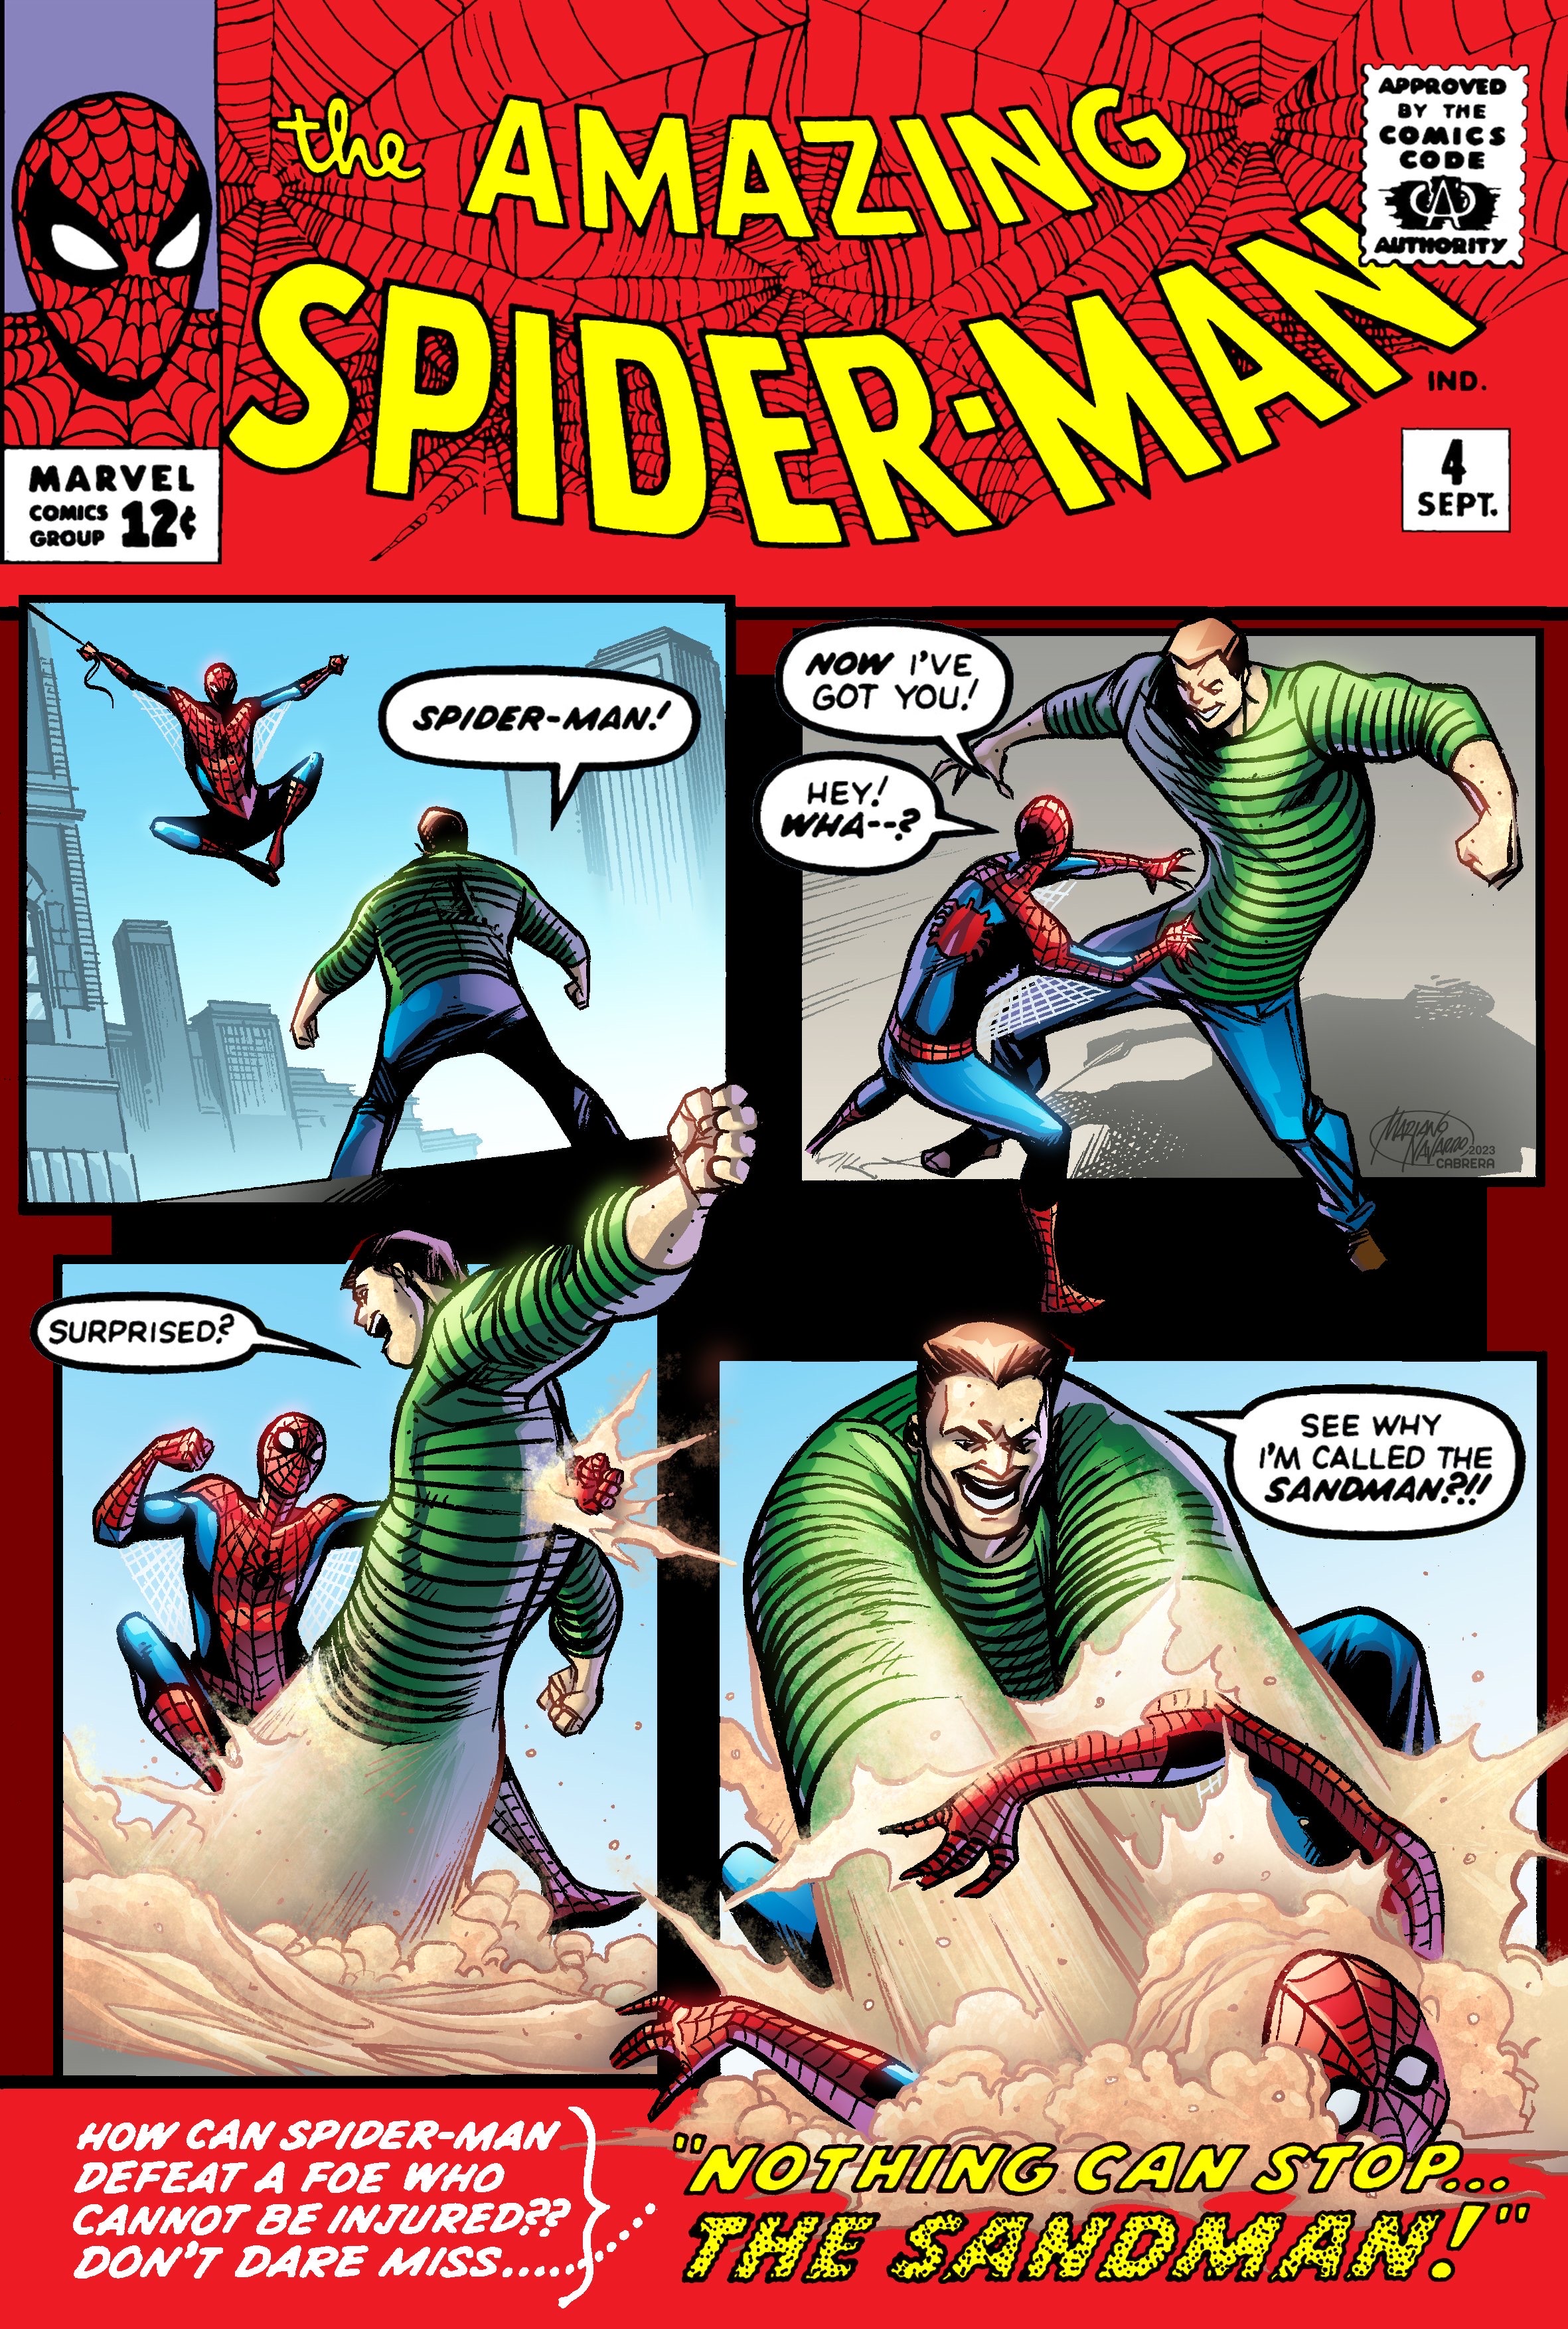 AMAZING FANTASY # 15 COVER RECREATION 1ST SPIDER-MAN ORIGINAL COMIC COLOR  ART